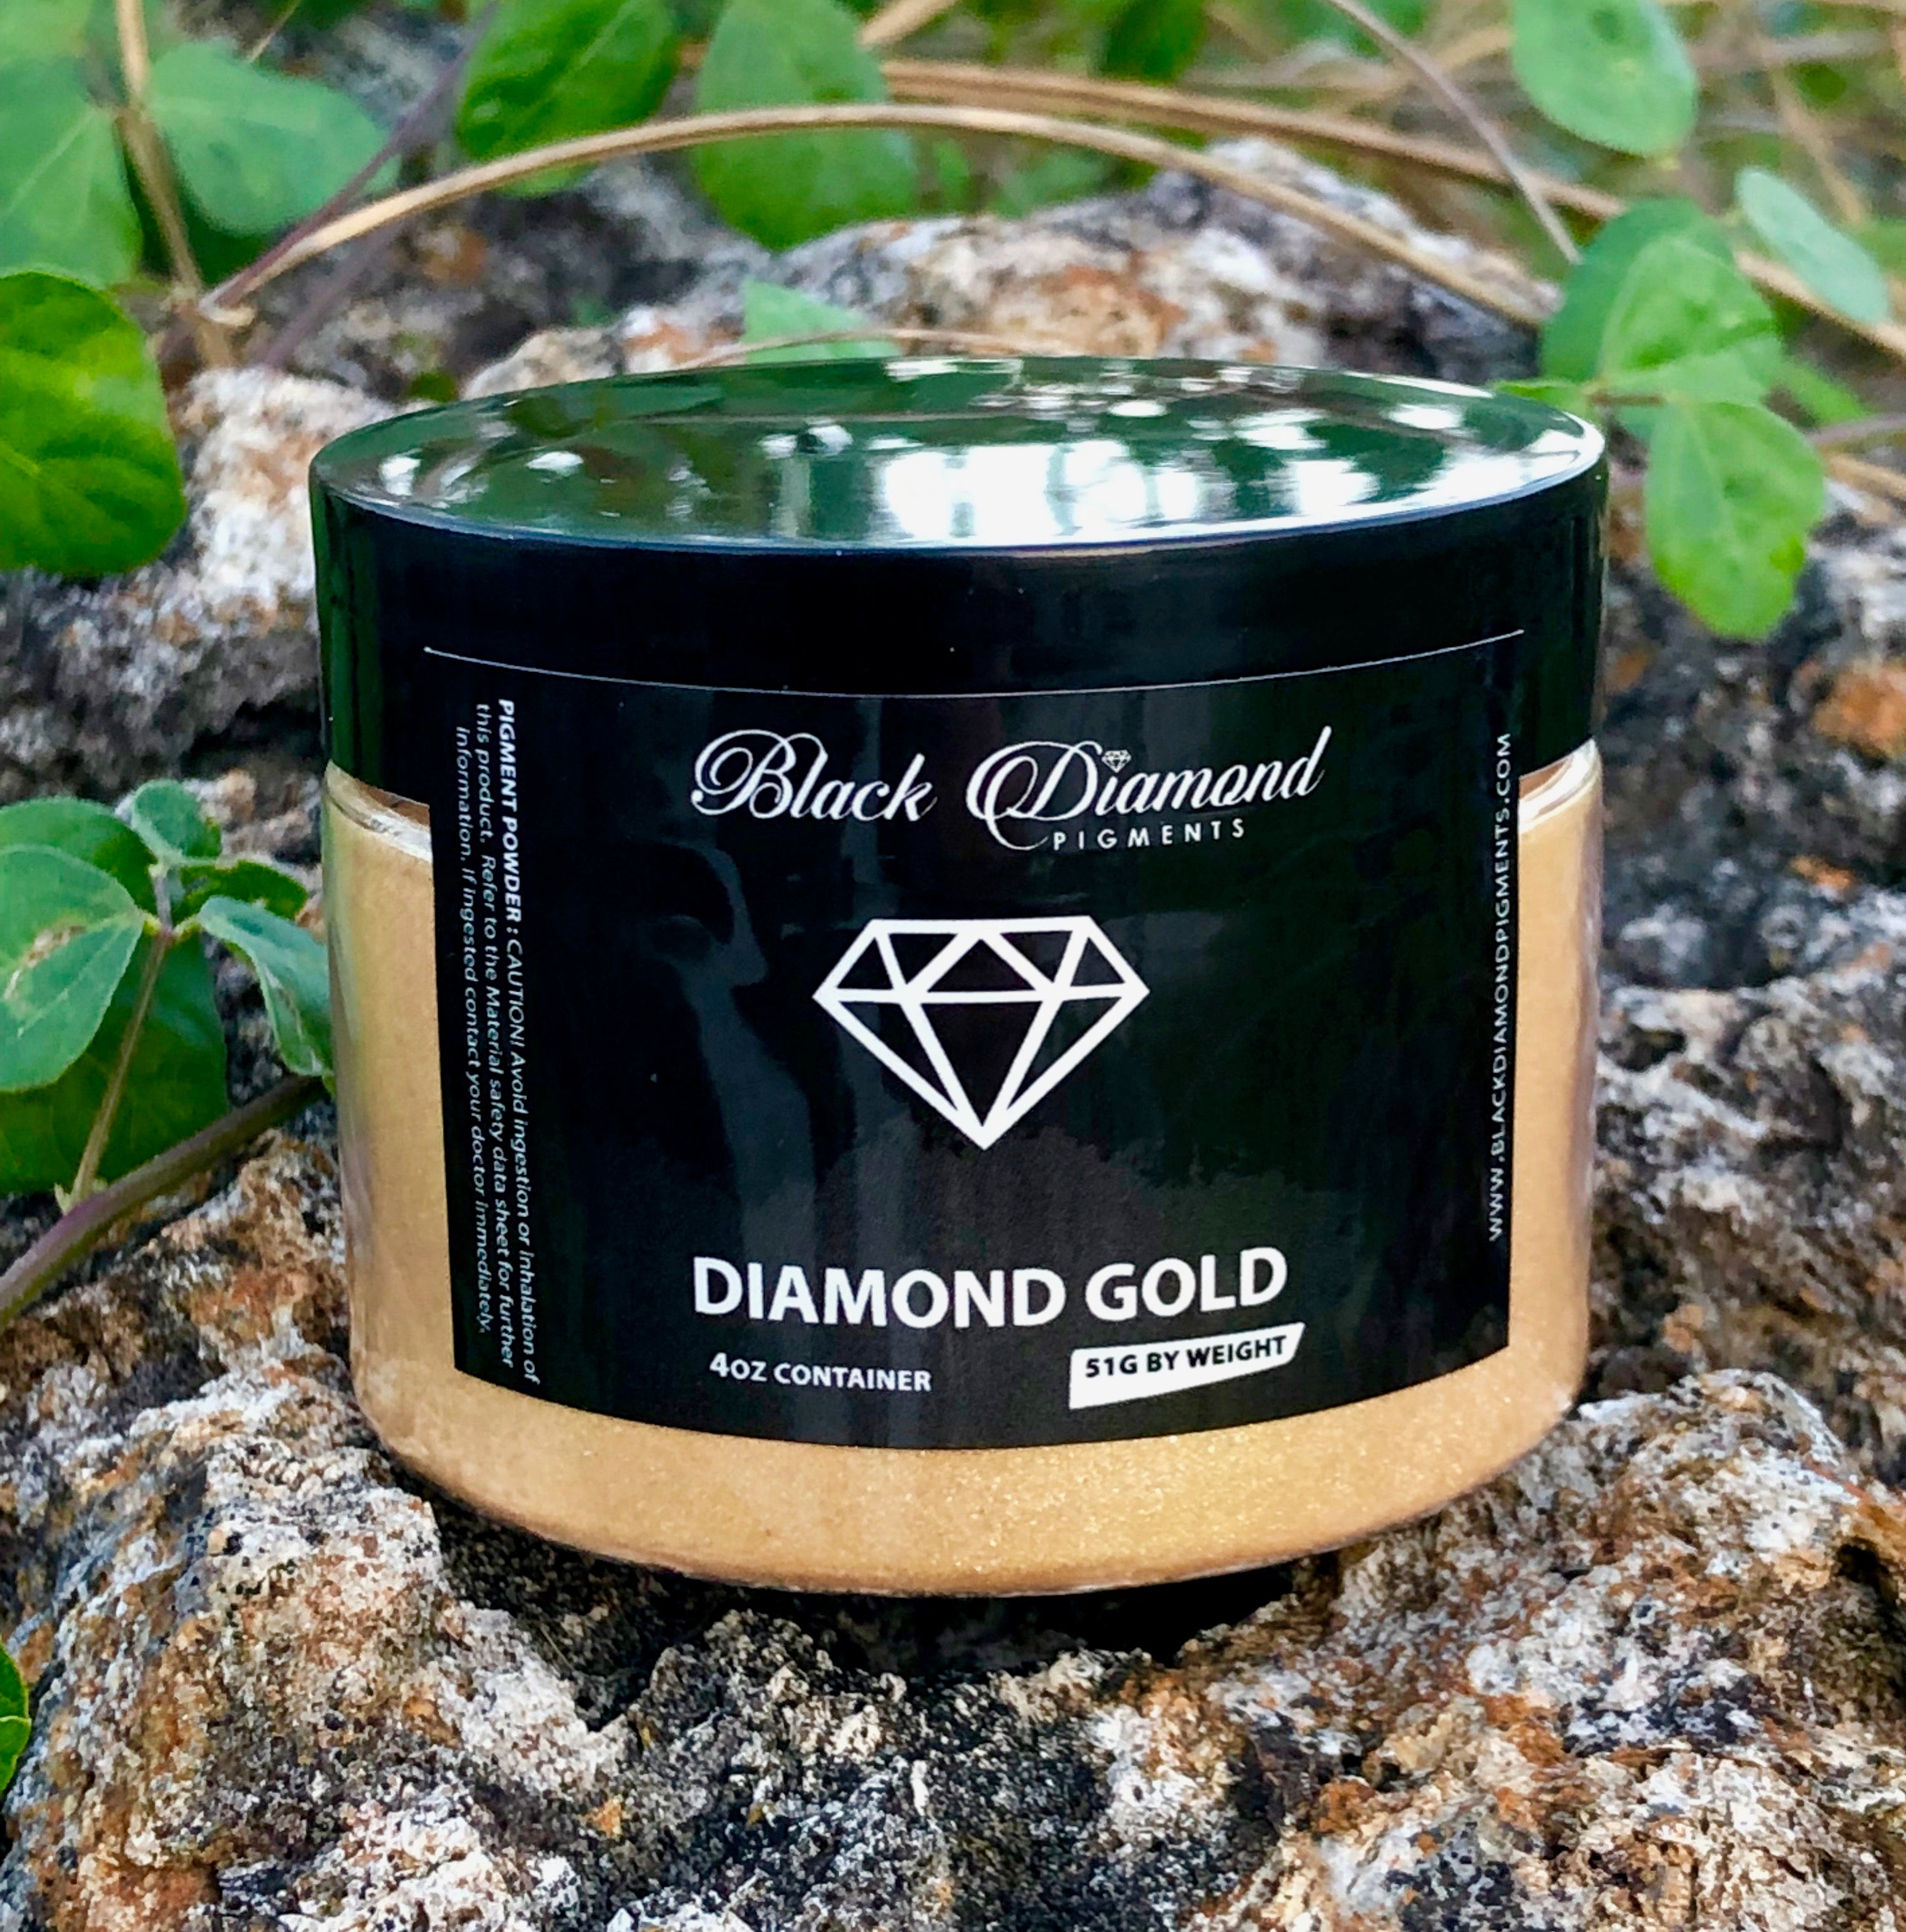 "DIAMOND GOLD" Black Diamond Pigments